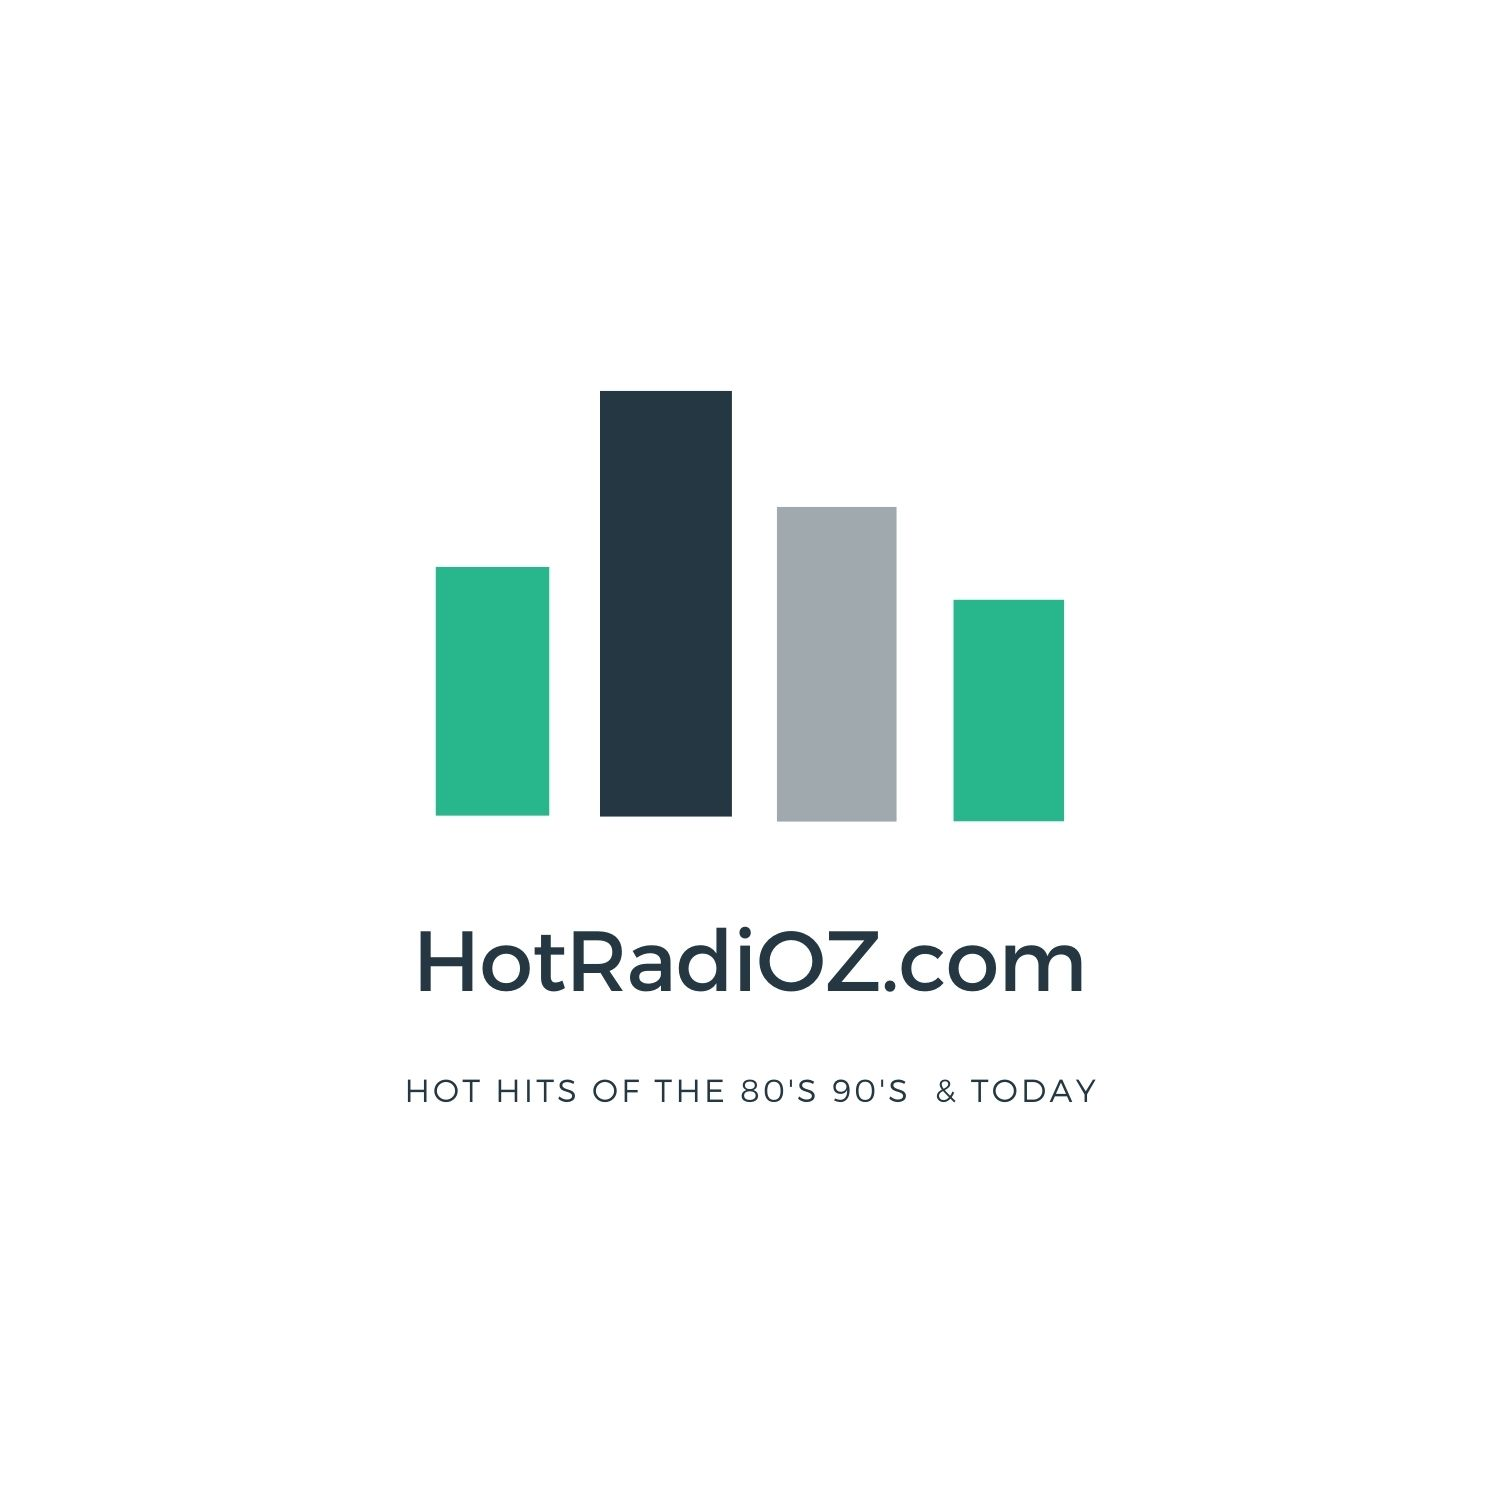 HotRadiOZ